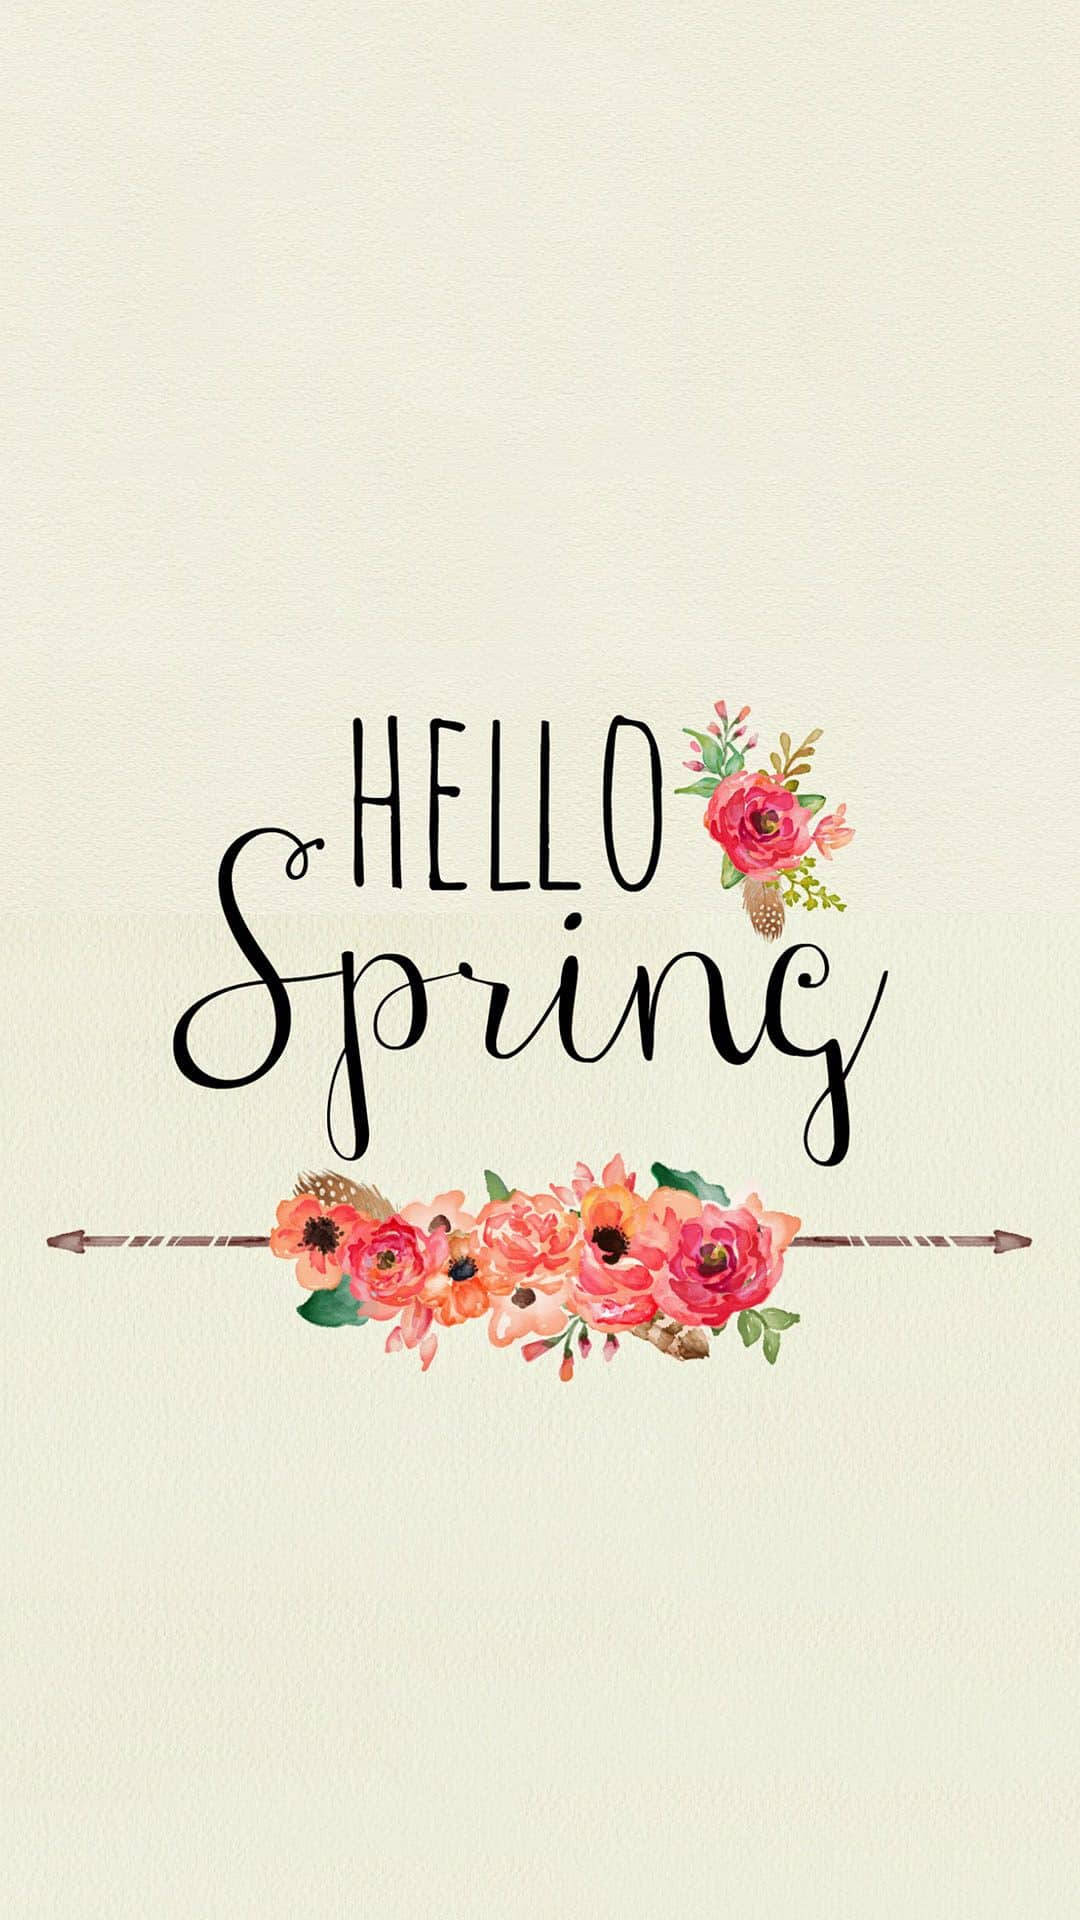 Cute Spring Greetings Wallpaper